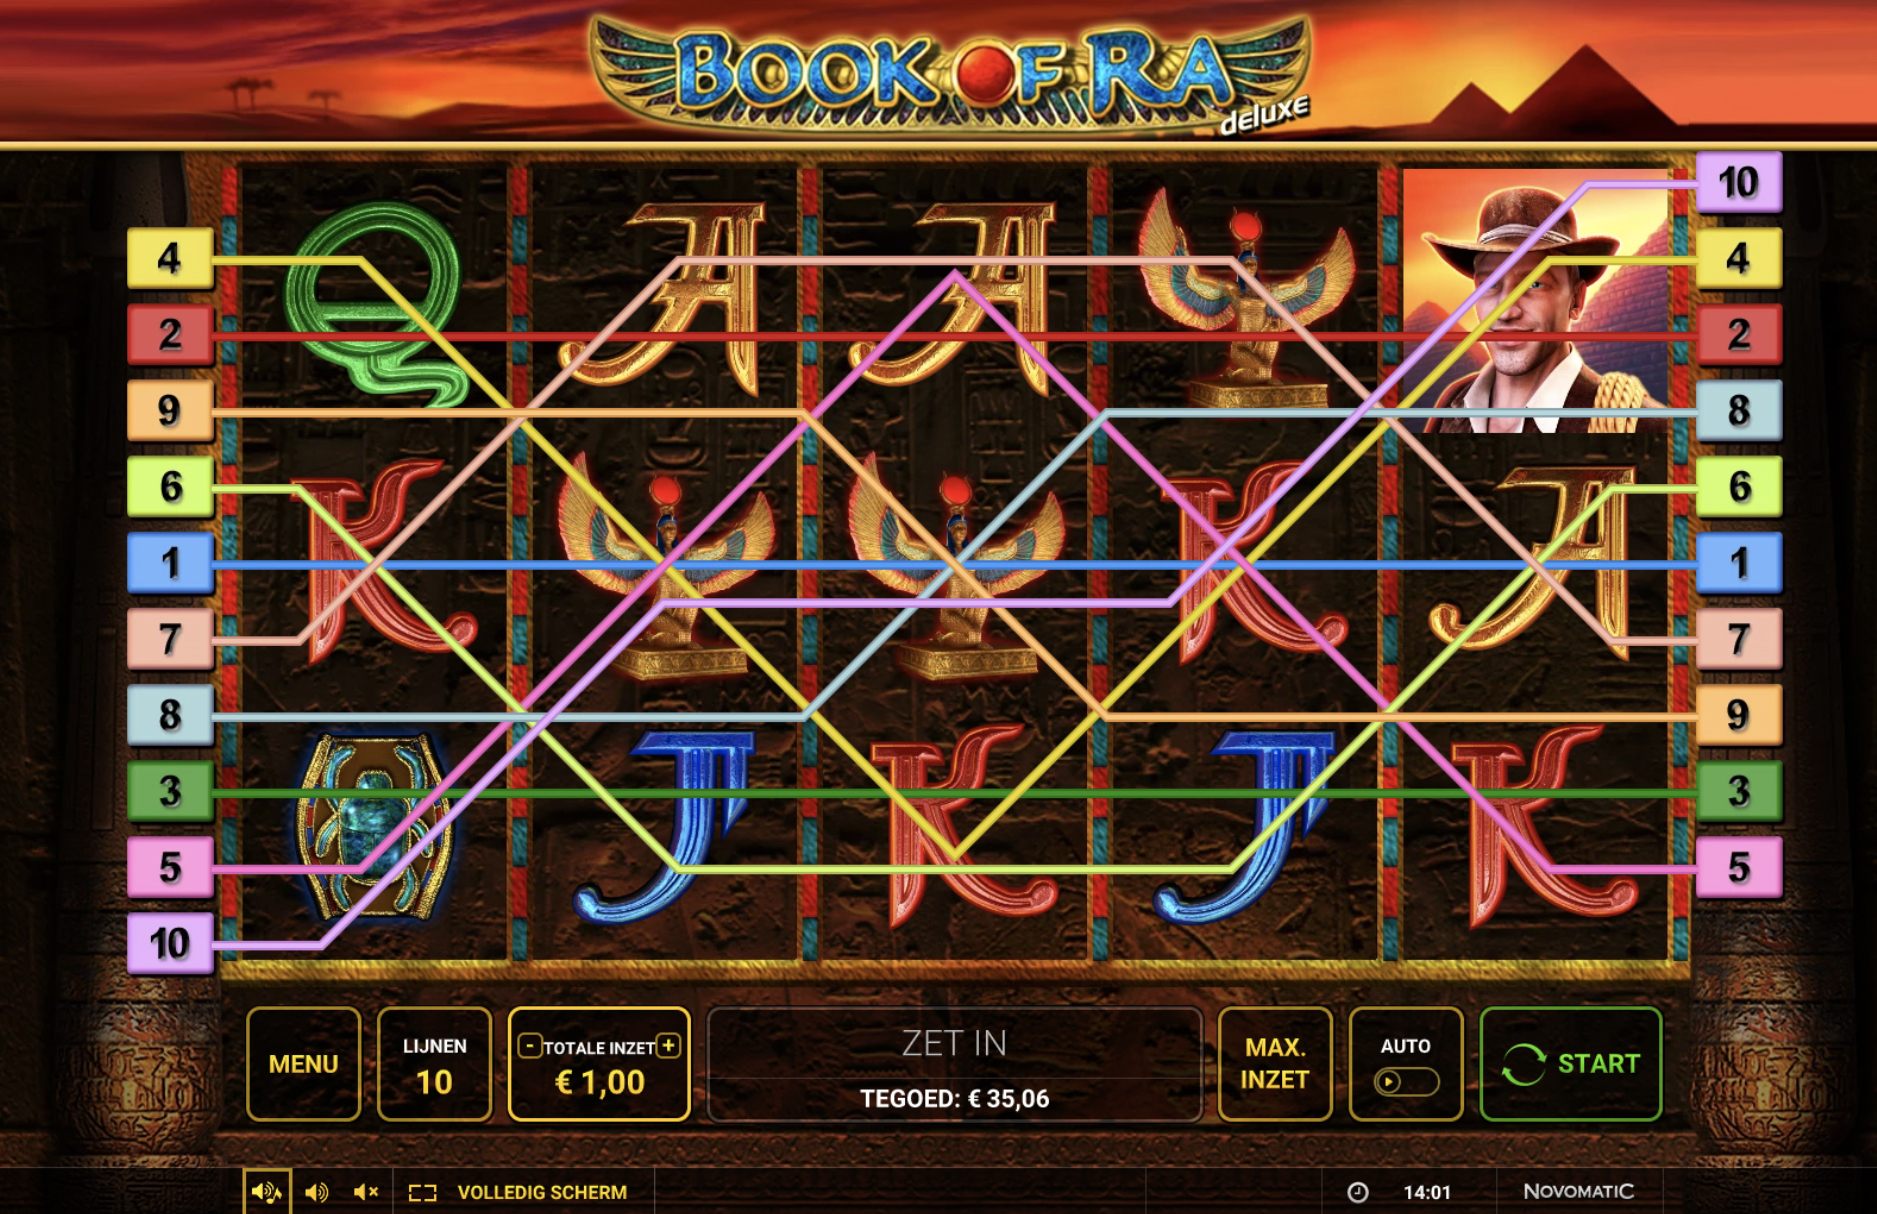 Book of ra slot game